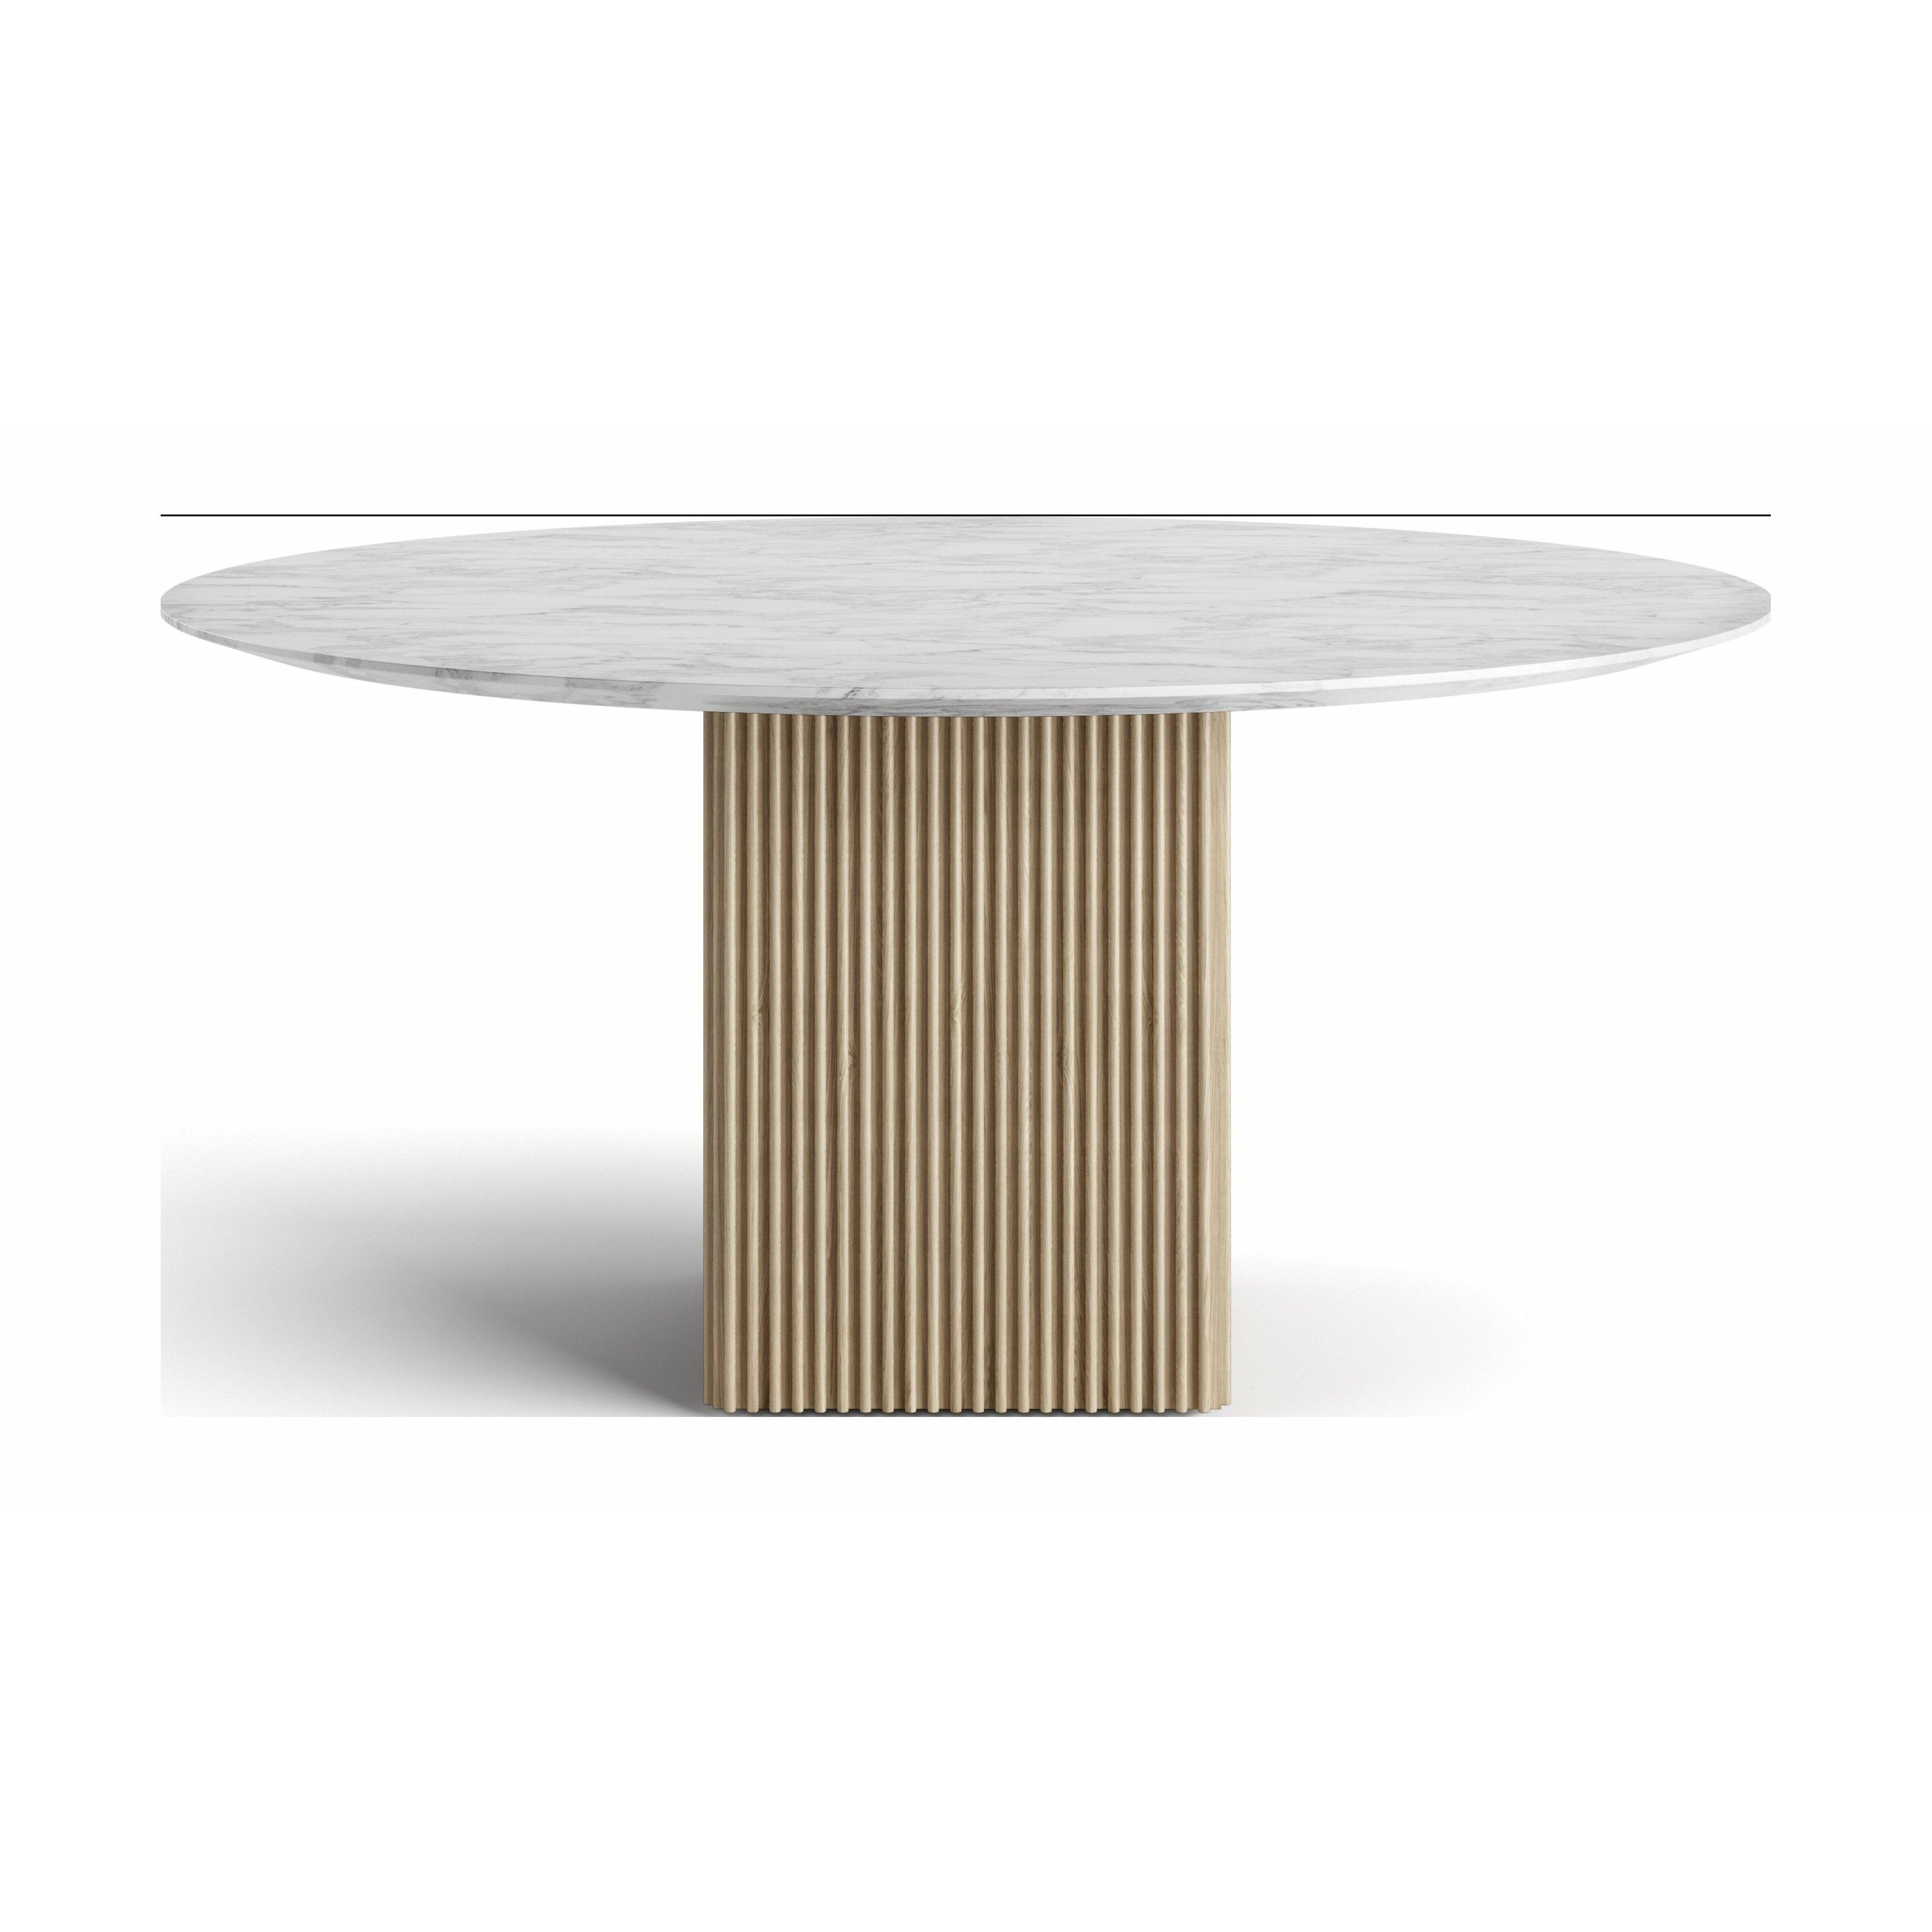 DK3 Ten de table à manger ronde marbre carrara / chêne blanc huilé, Ø150 cm